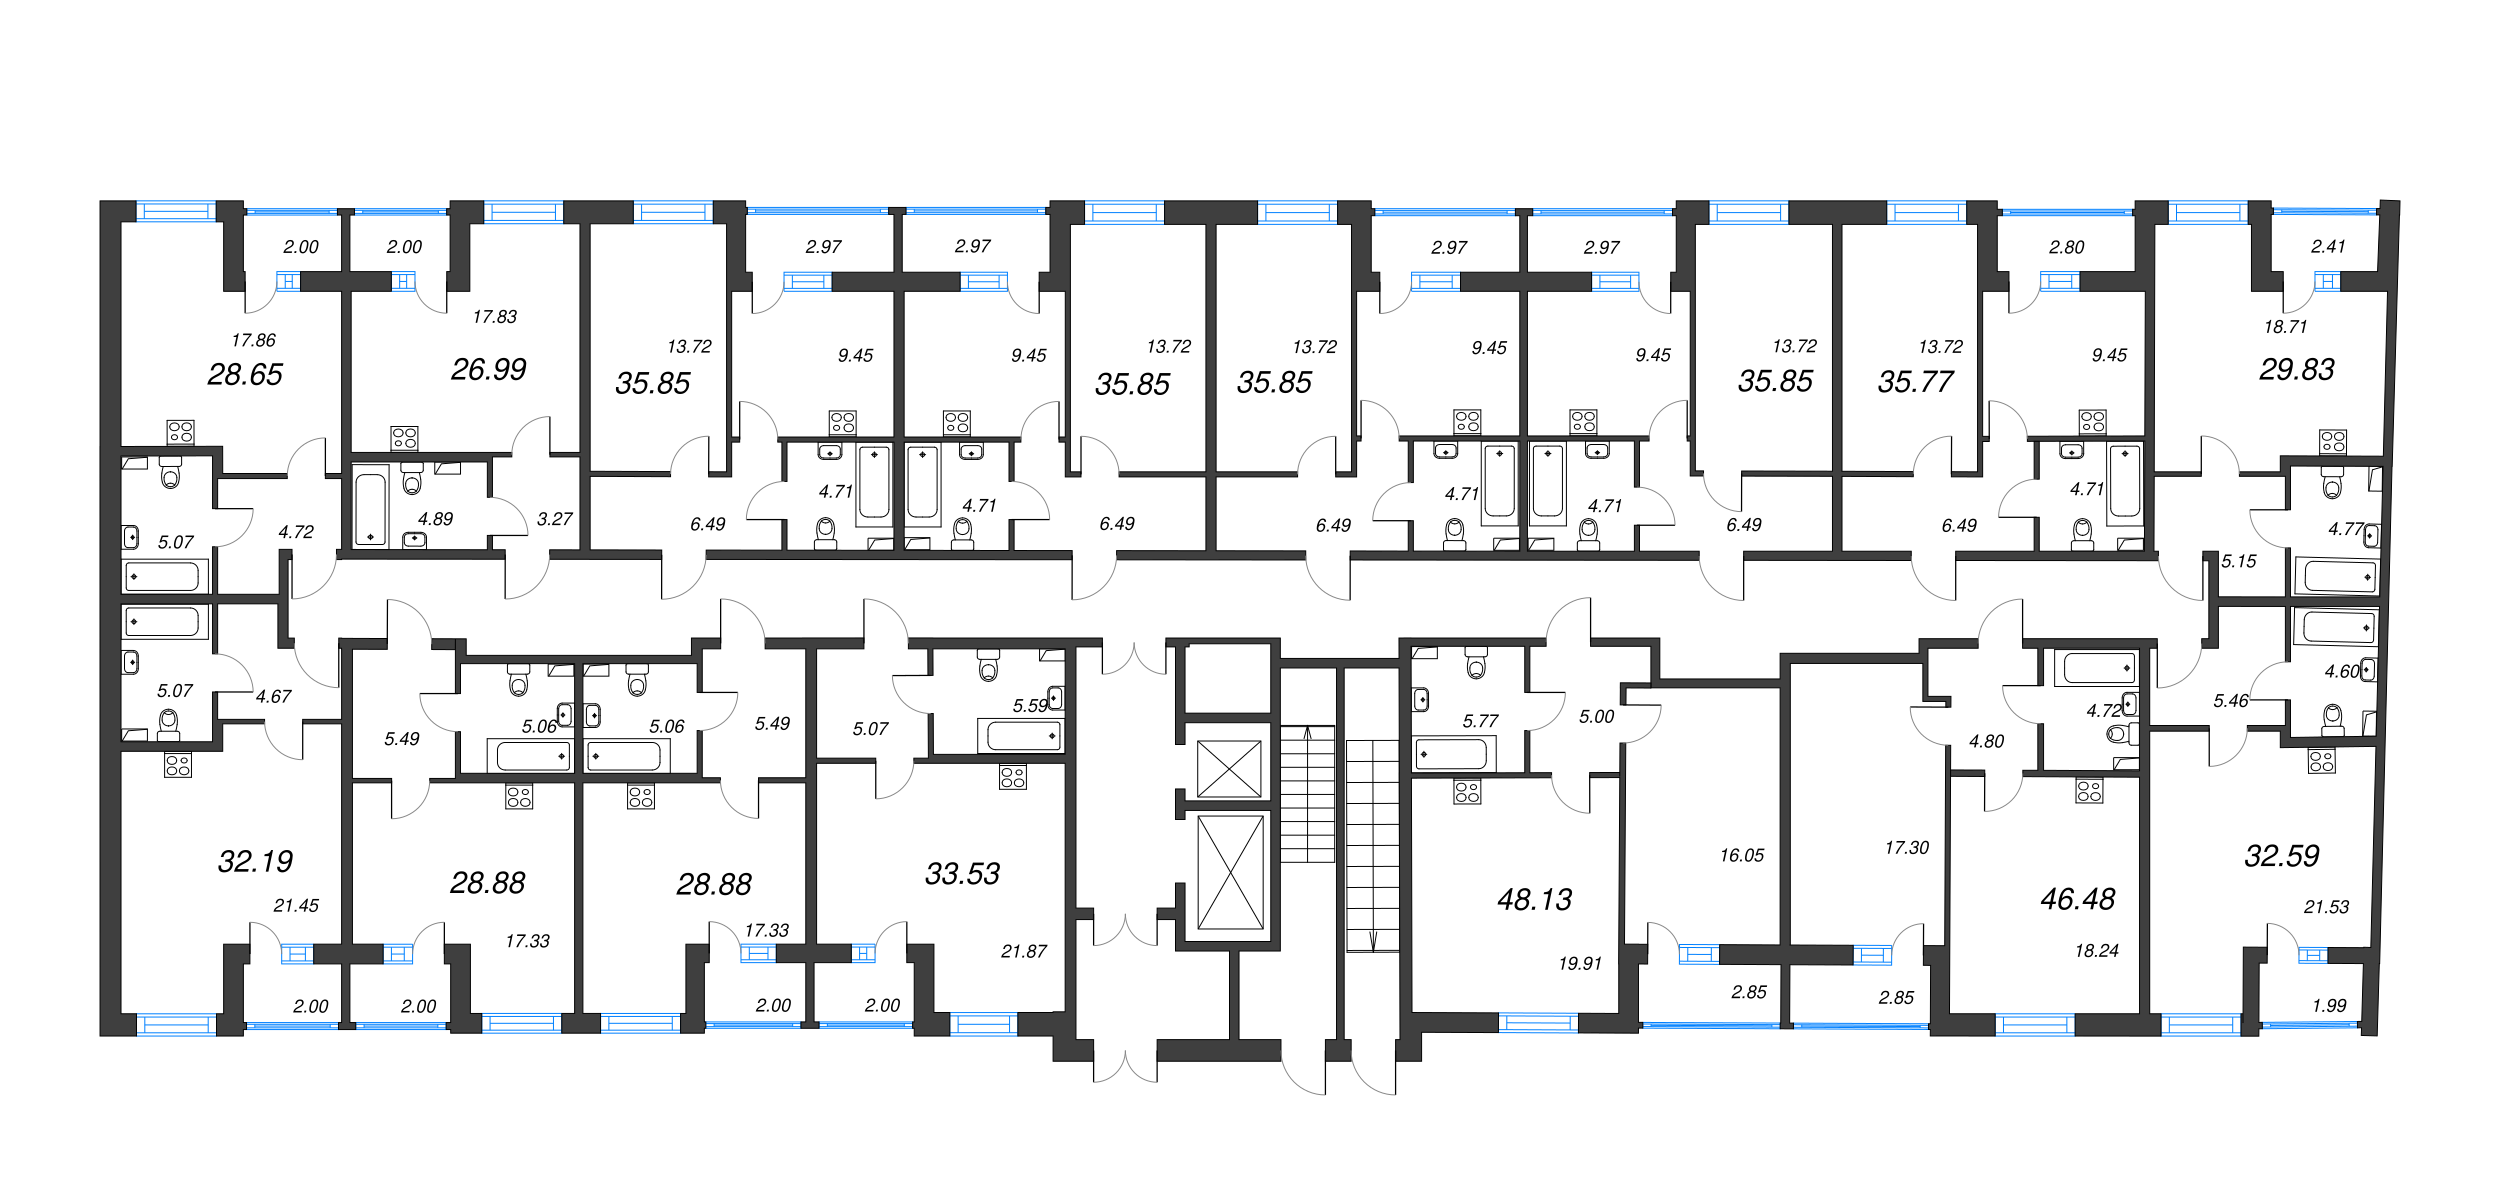 2-комнатная (Евро) квартира, 46.48 м² - планировка этажа